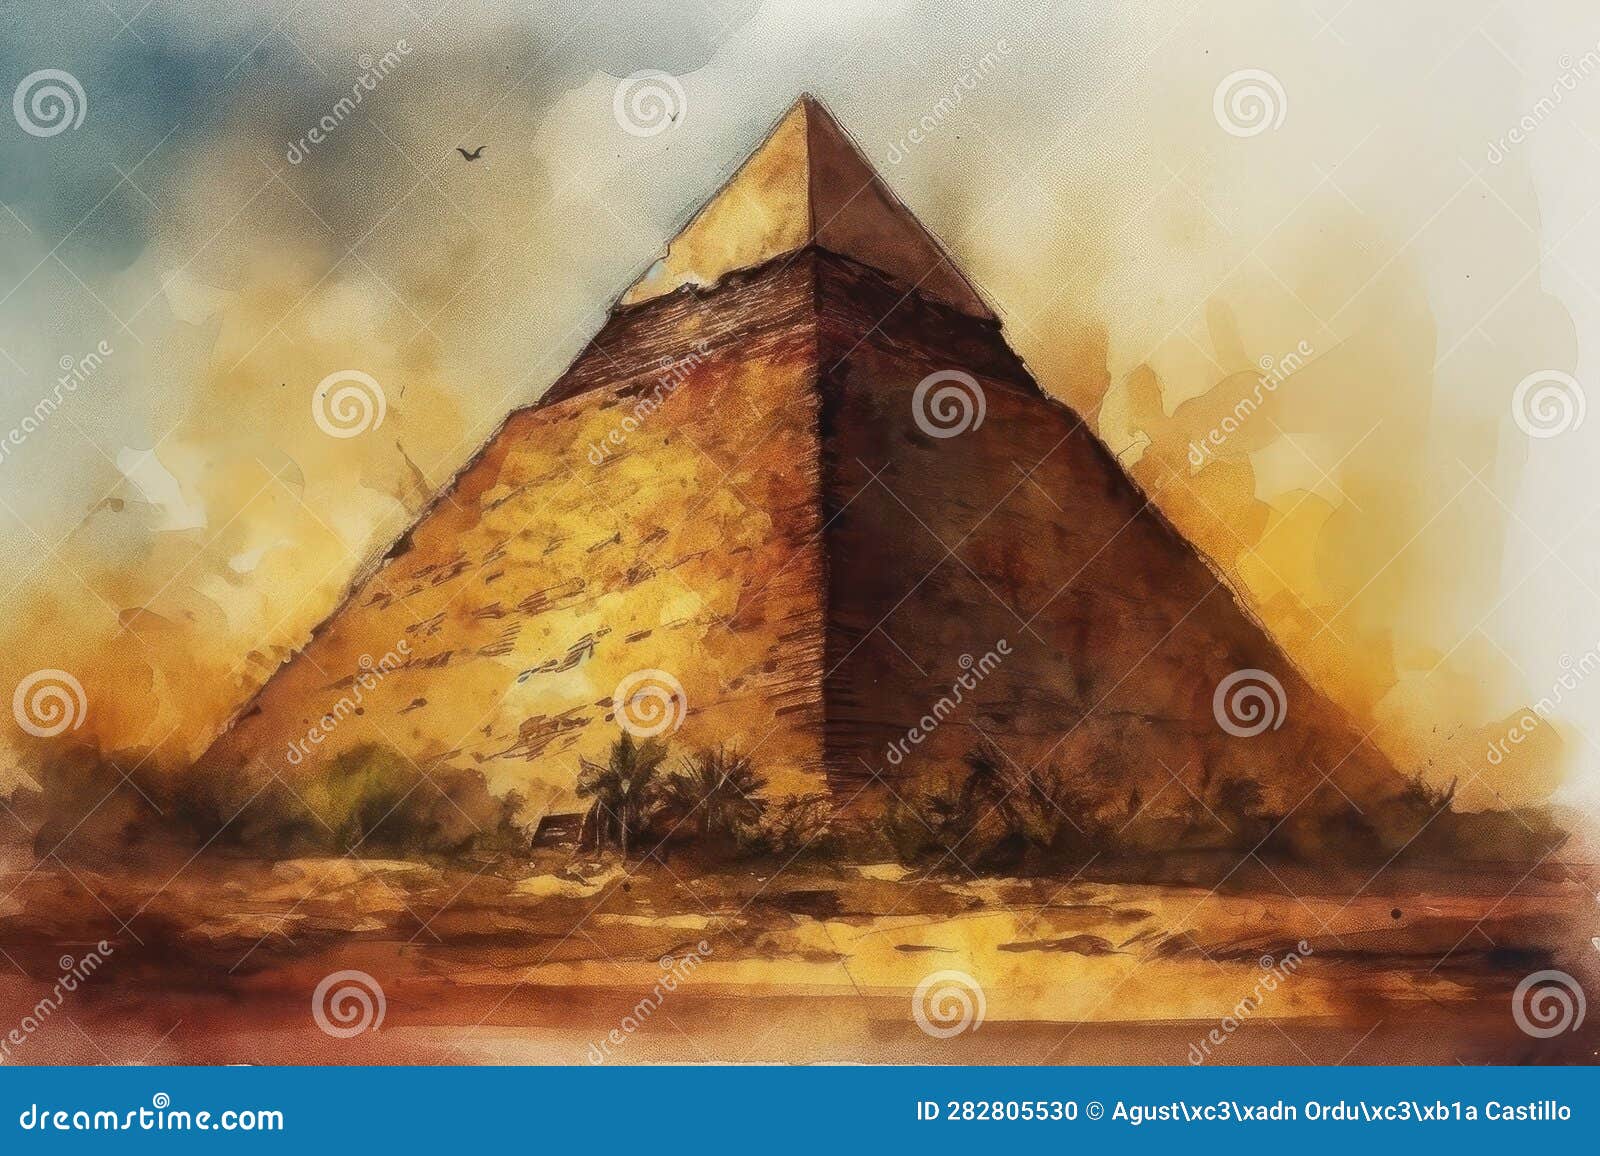 972 Pyramids Giza Sketch Images, Stock Photos & Vectors | Shutterstock